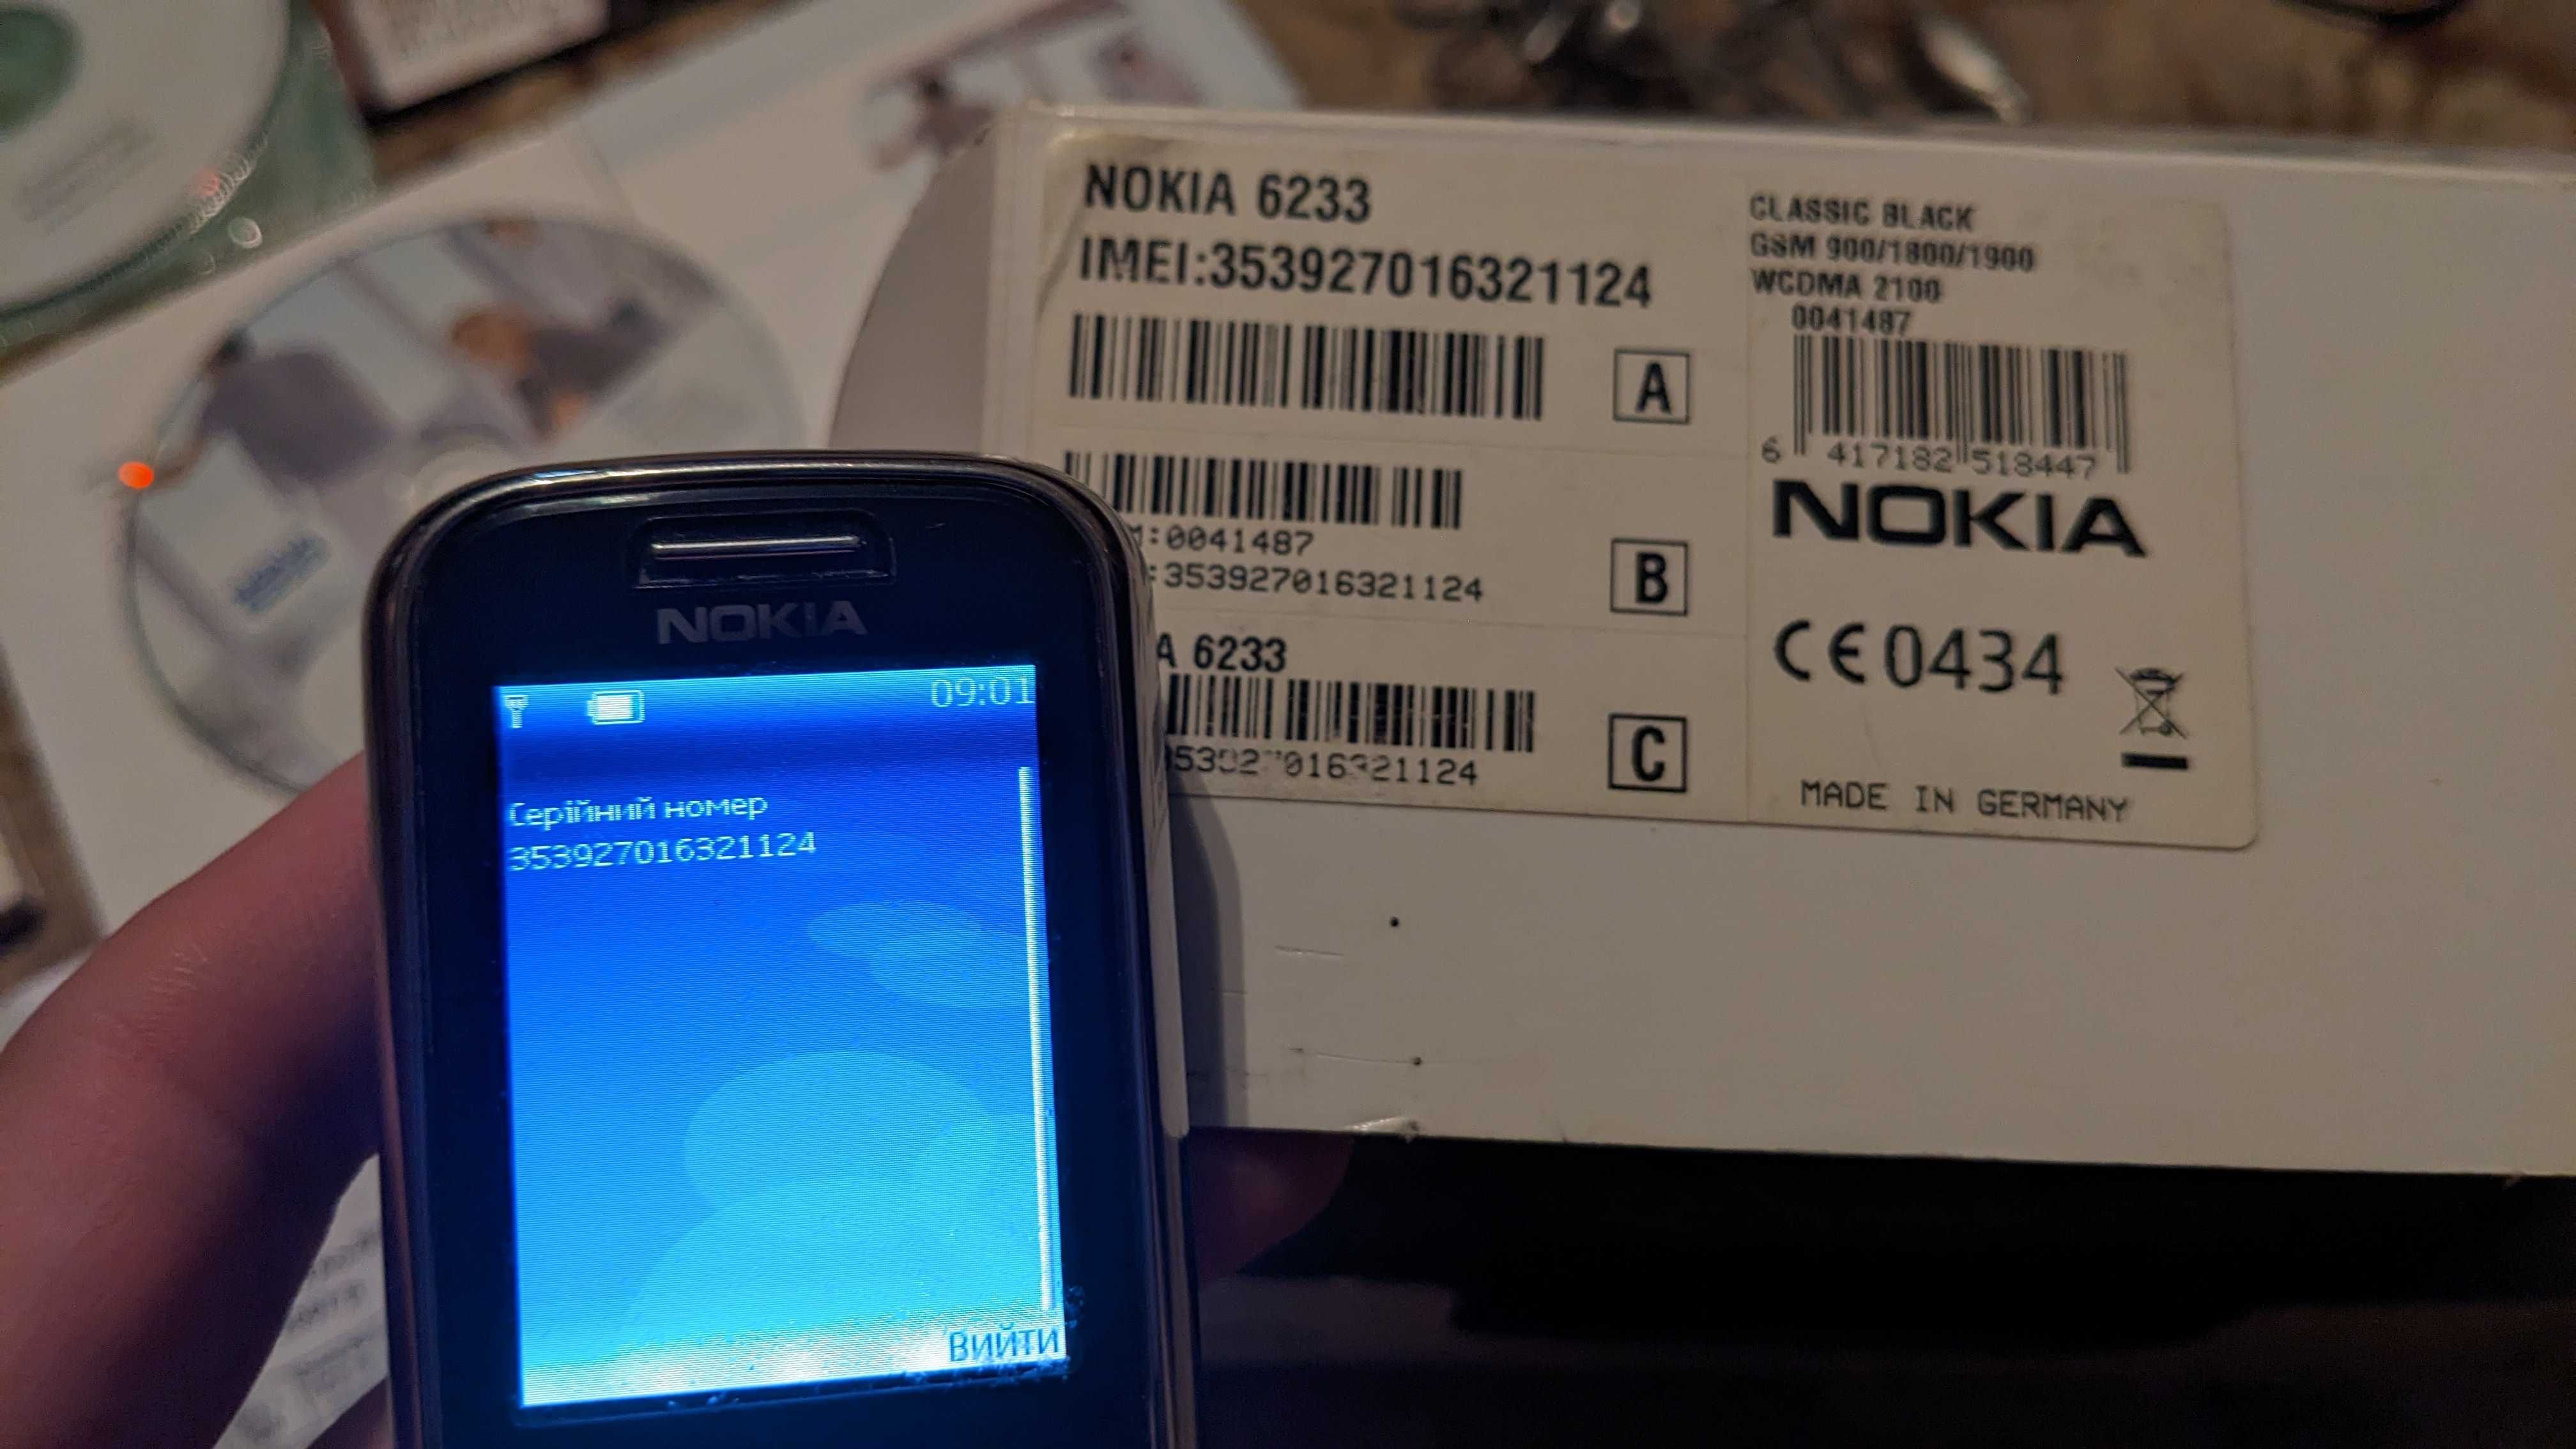 Nokia 6233 x Club Vintage 3310 x Siemens